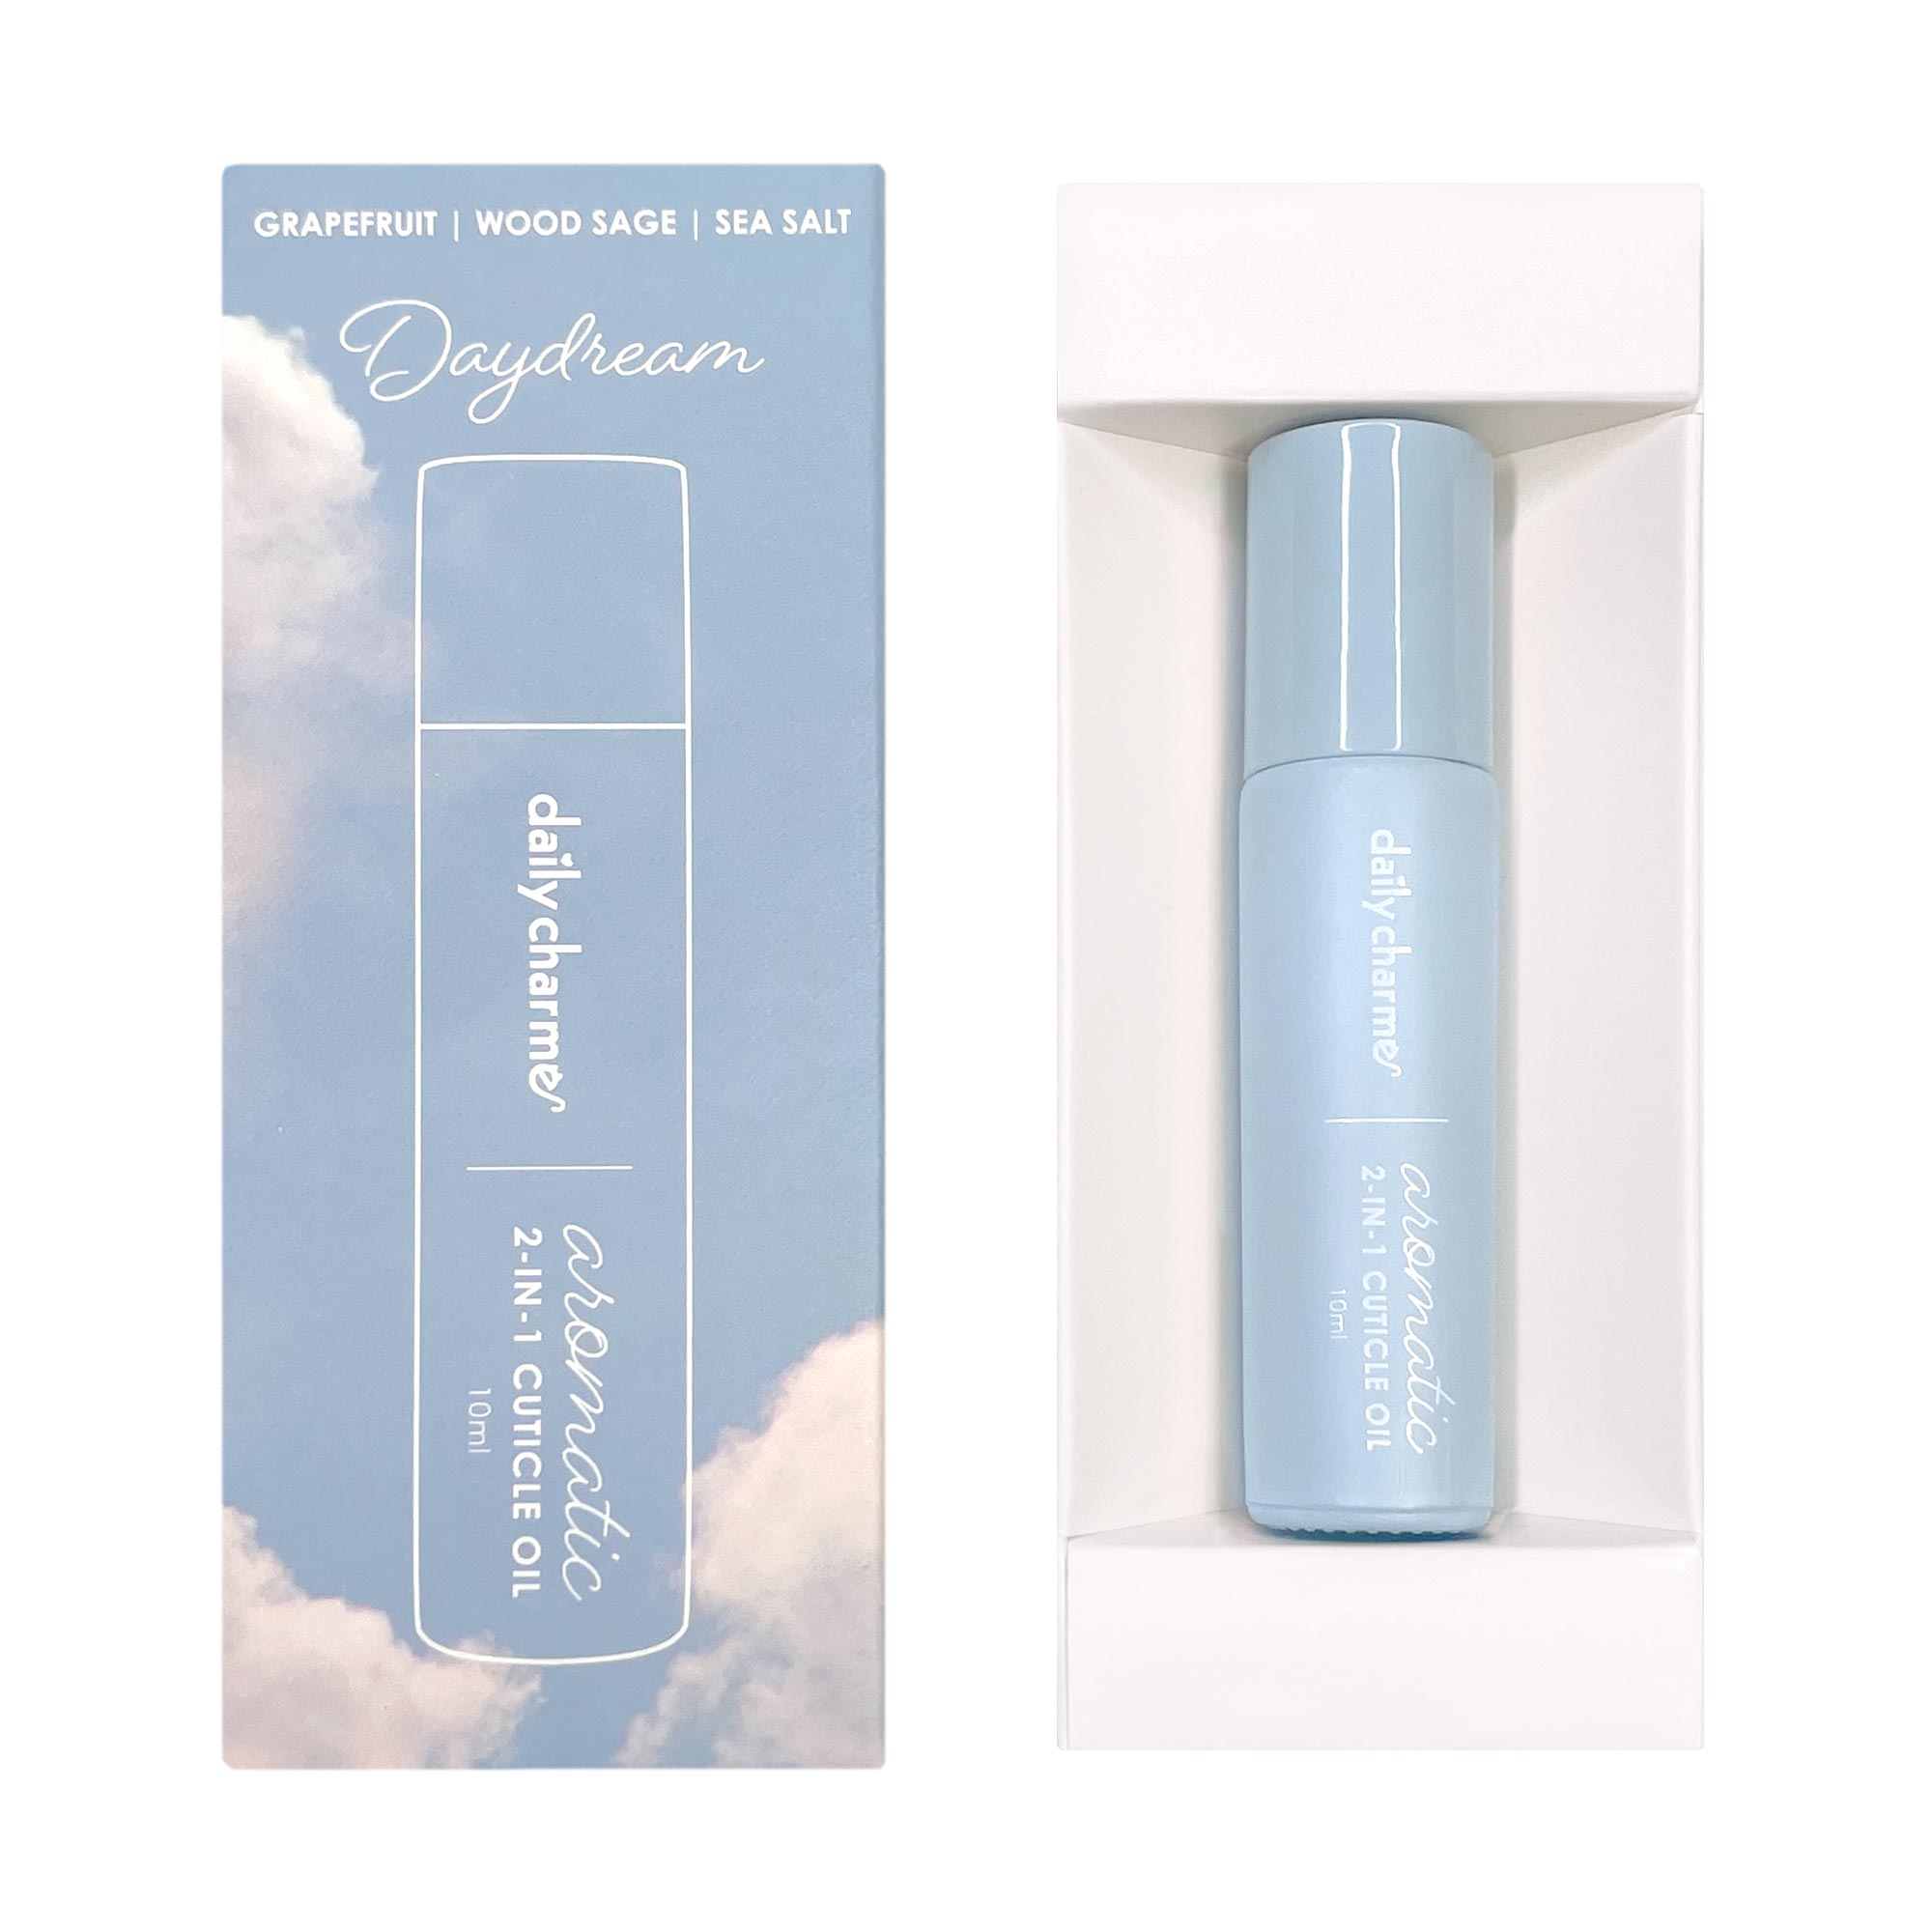 Daily Charme Aromatic 2-in-1 Cuticle Oil Roller / Daydream Sea Salt Sage Grapefruit Perfume Ocean Refreshing